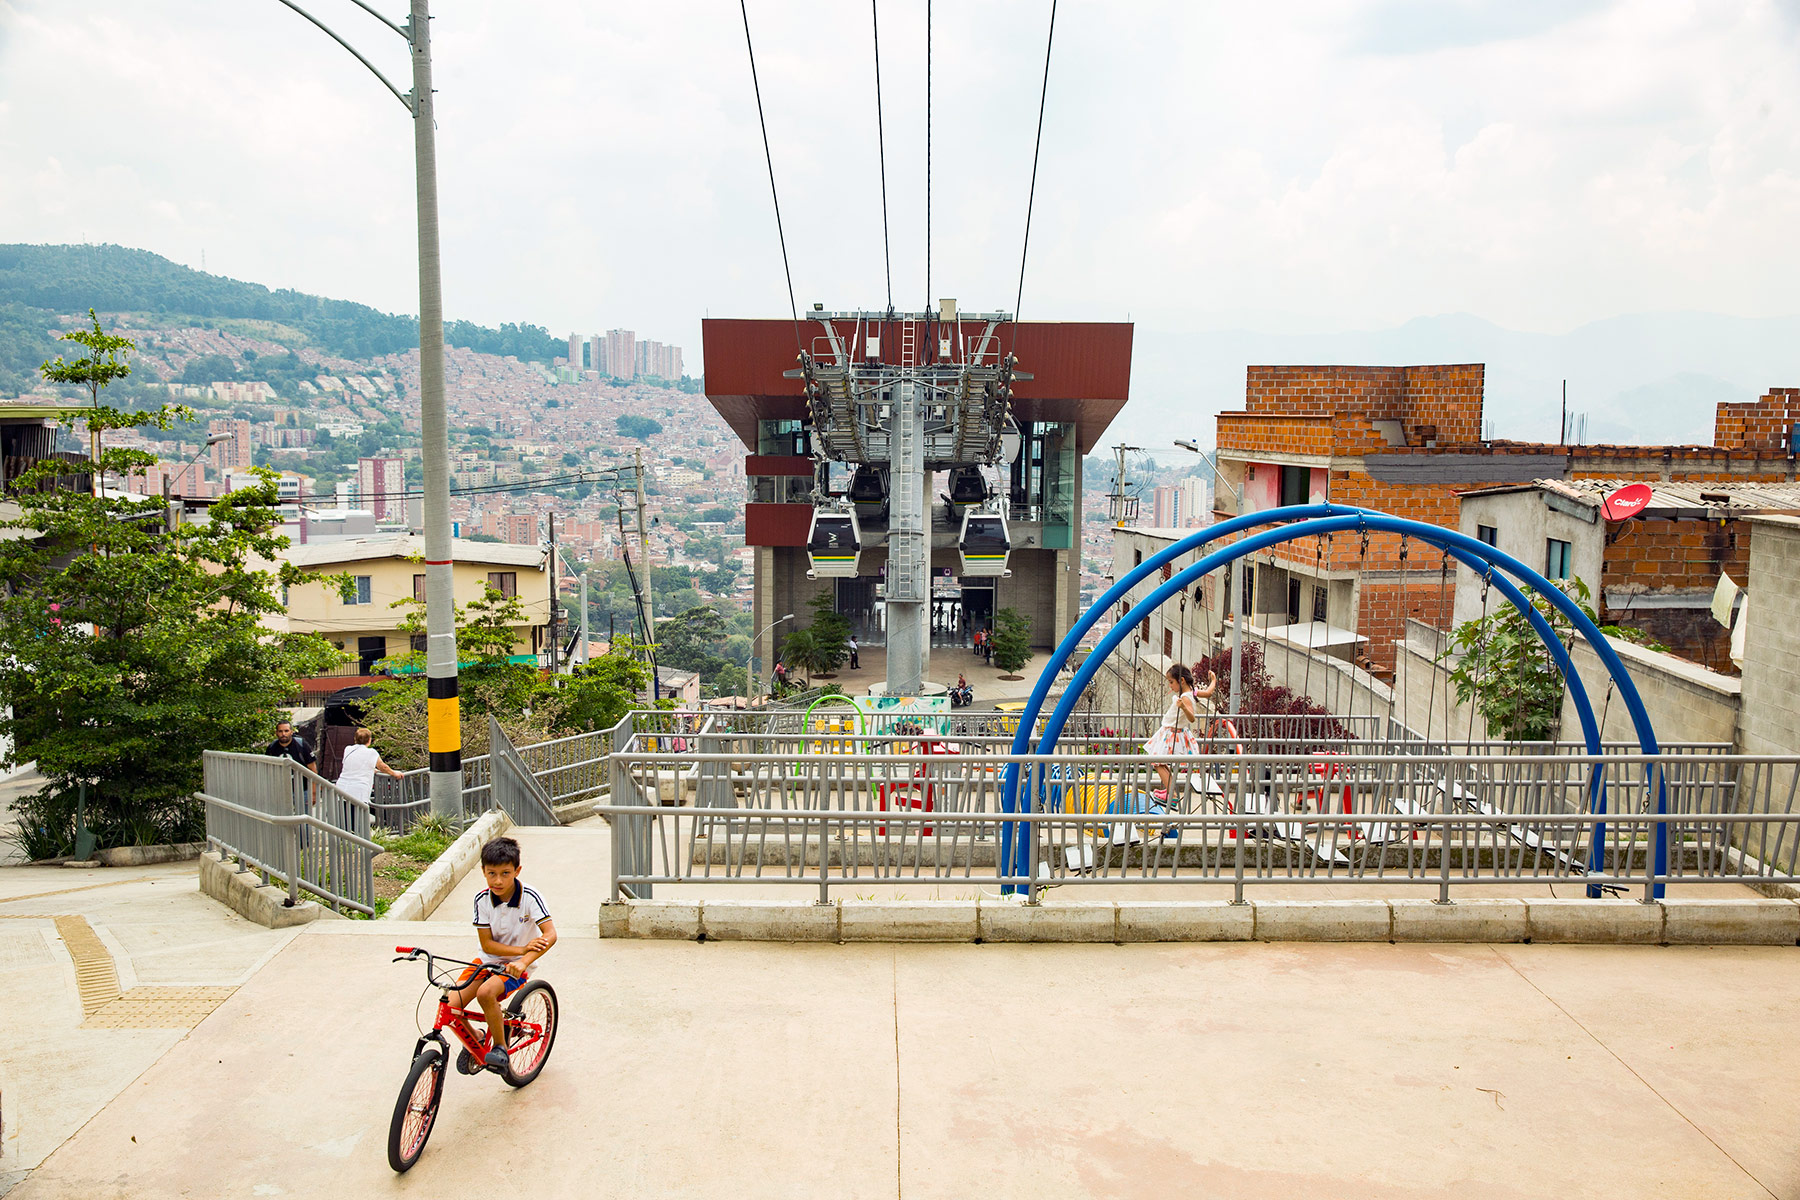 Metrocable J-Line in Medellin, Colombia. Detachable monocable gondola lift as mass urban transportation.